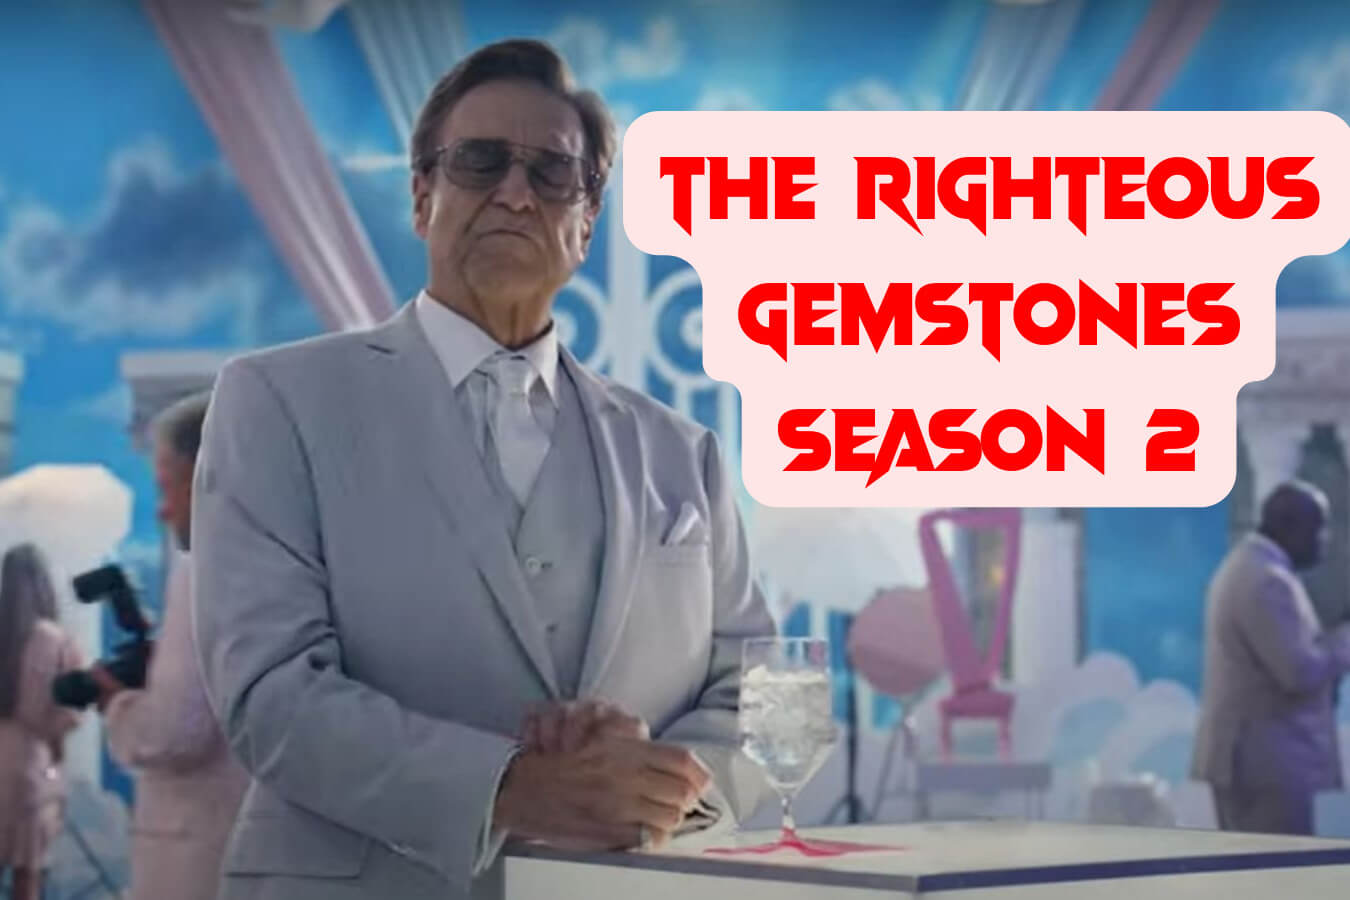 The Righteous Gemstones season 2